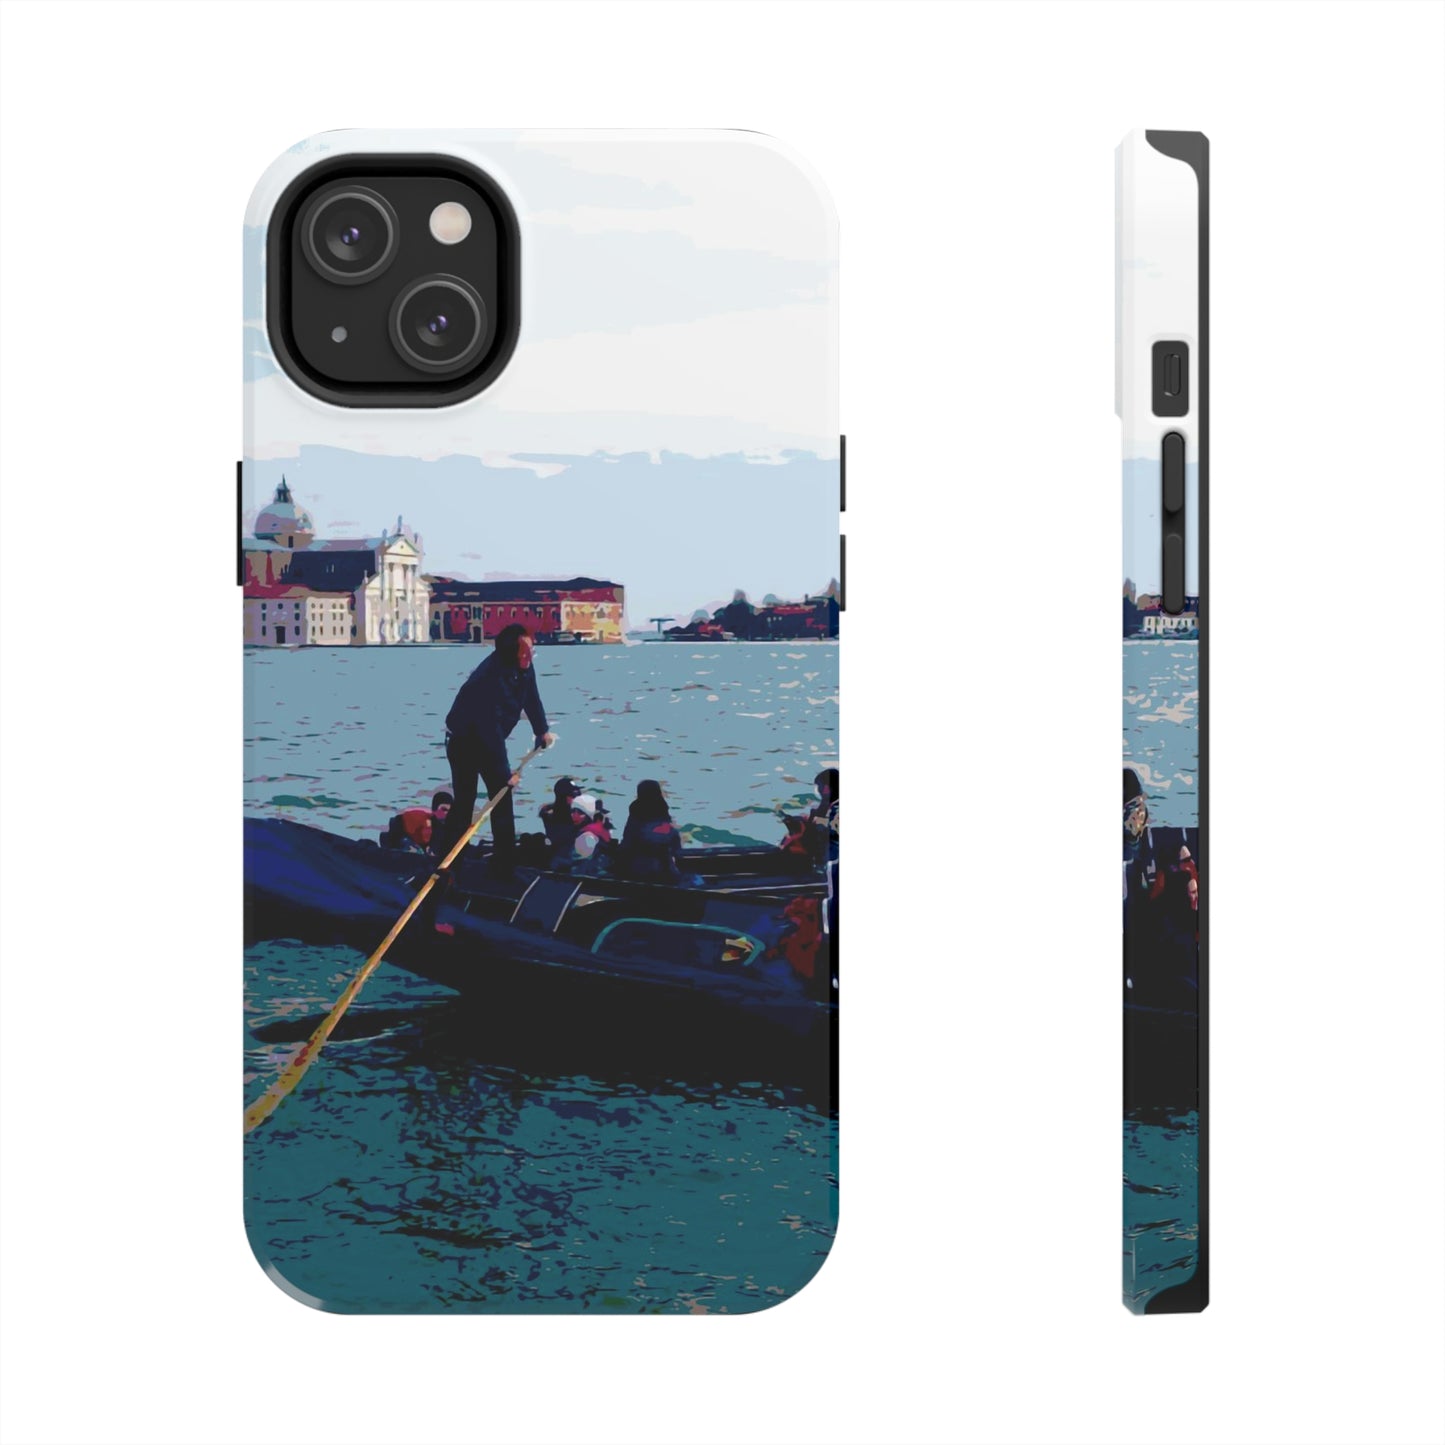 BoatV-2 Tough iPhone Cases